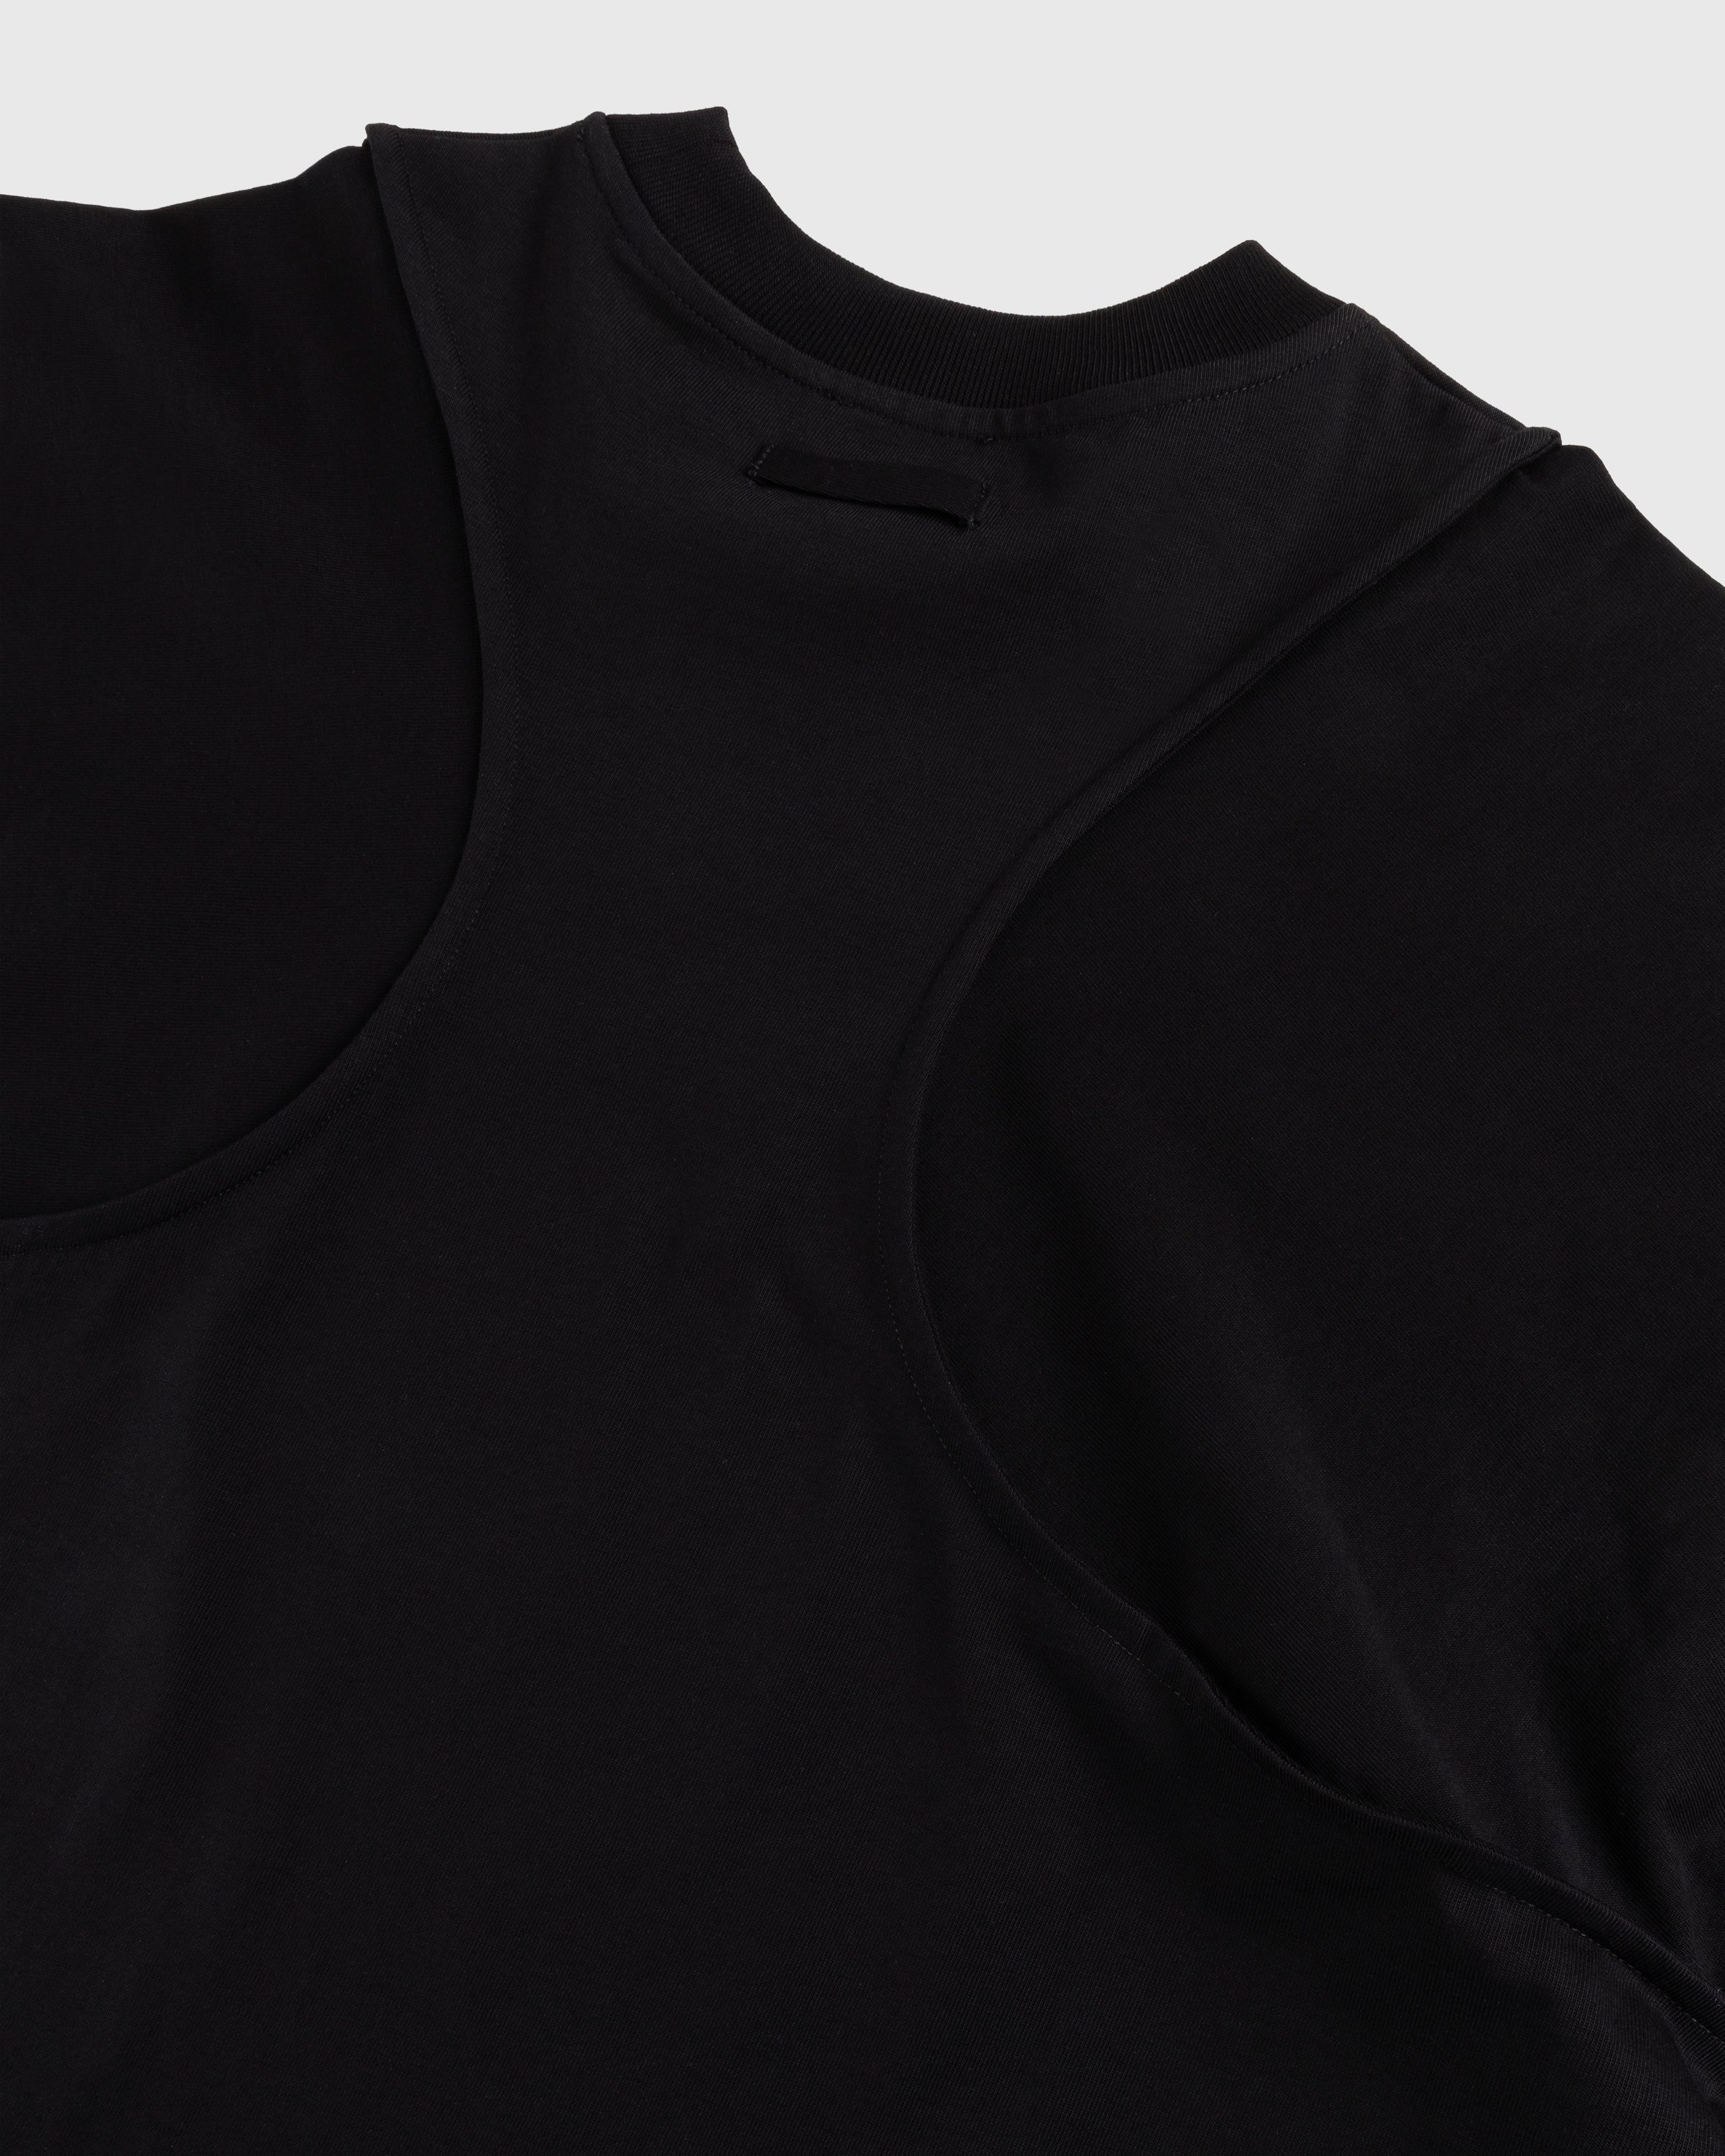 Jean Paul Gaultier - JPG T-Shirt Black - Clothing - Black - Image 4